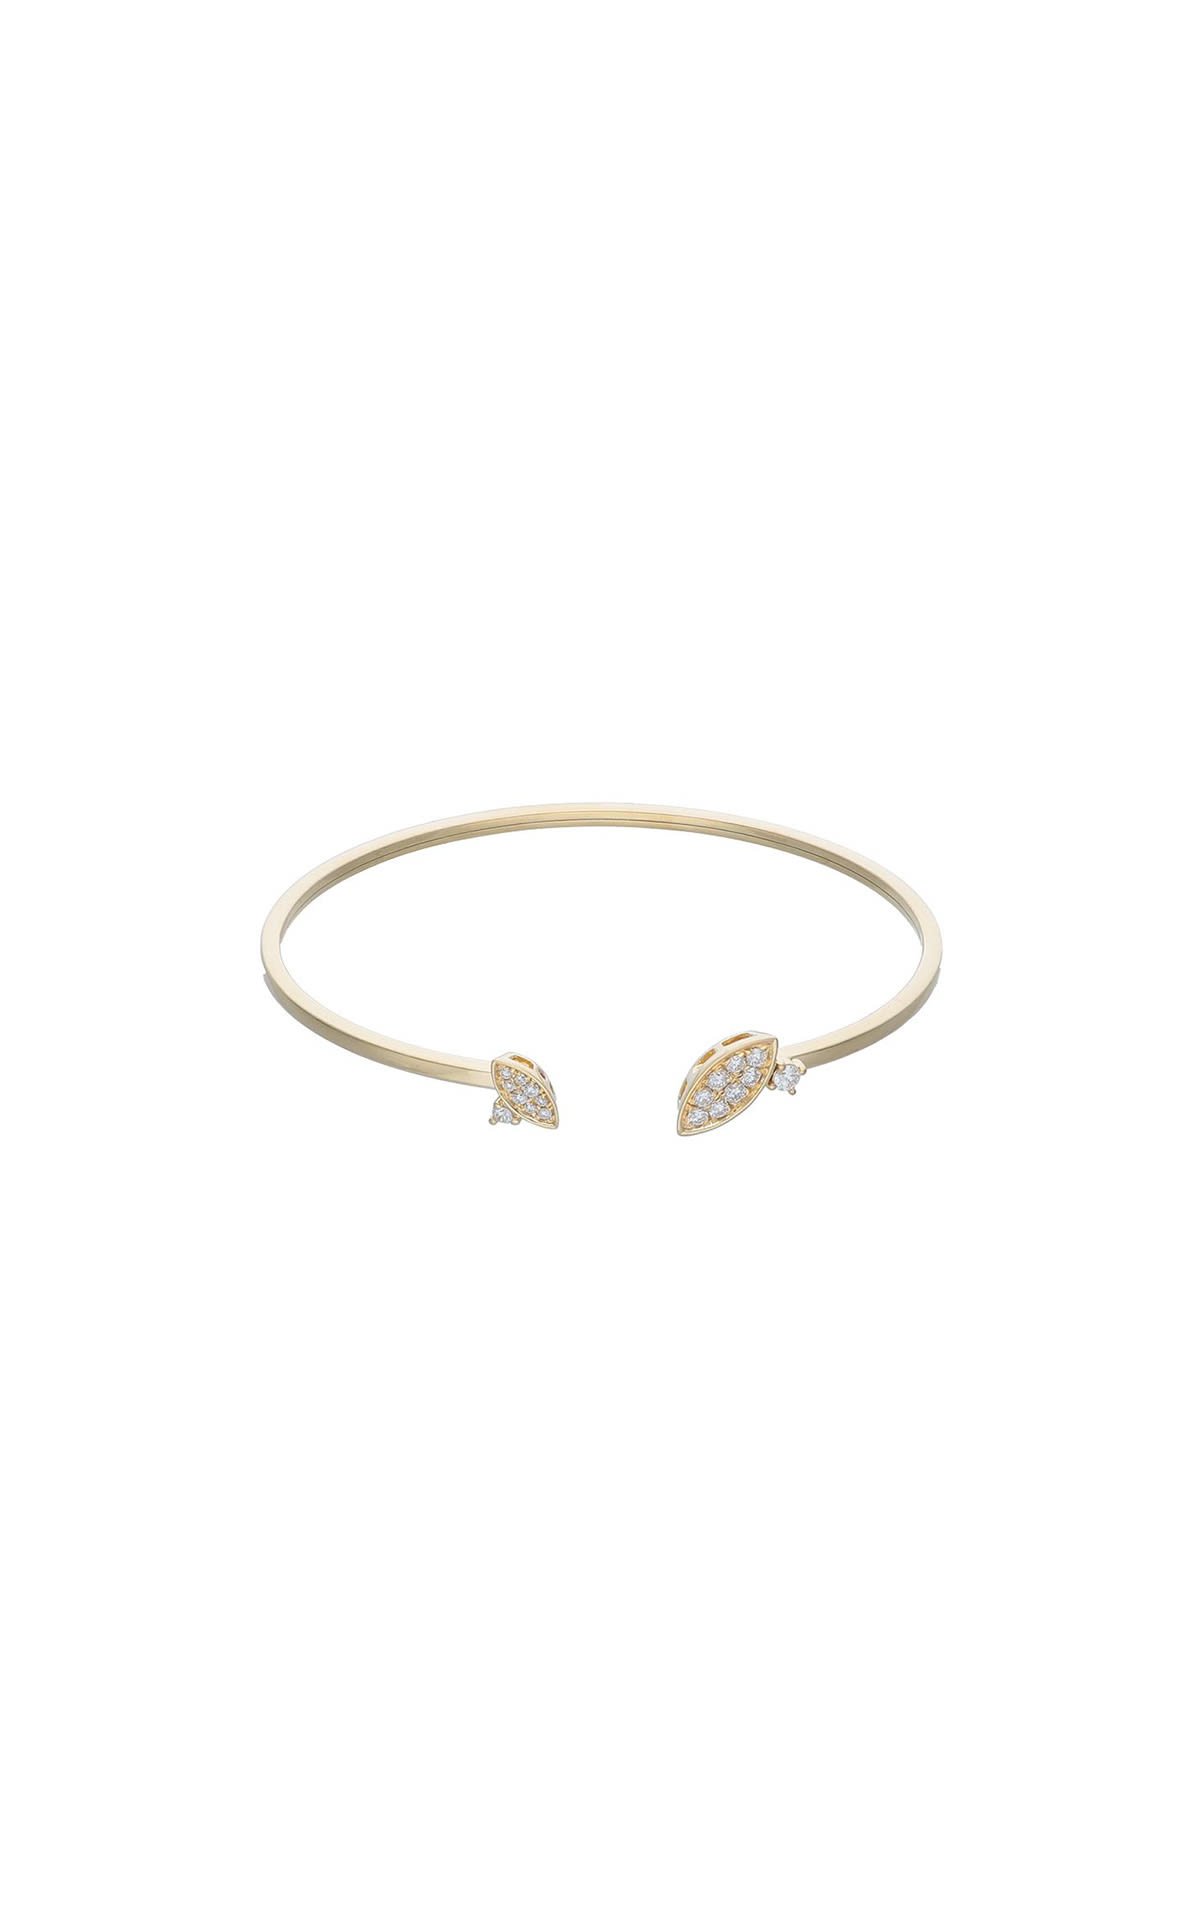 ALFIERI & ST. JOHN | Luxury Zone Bracelet in yellow gold and diamonds0.30 CT